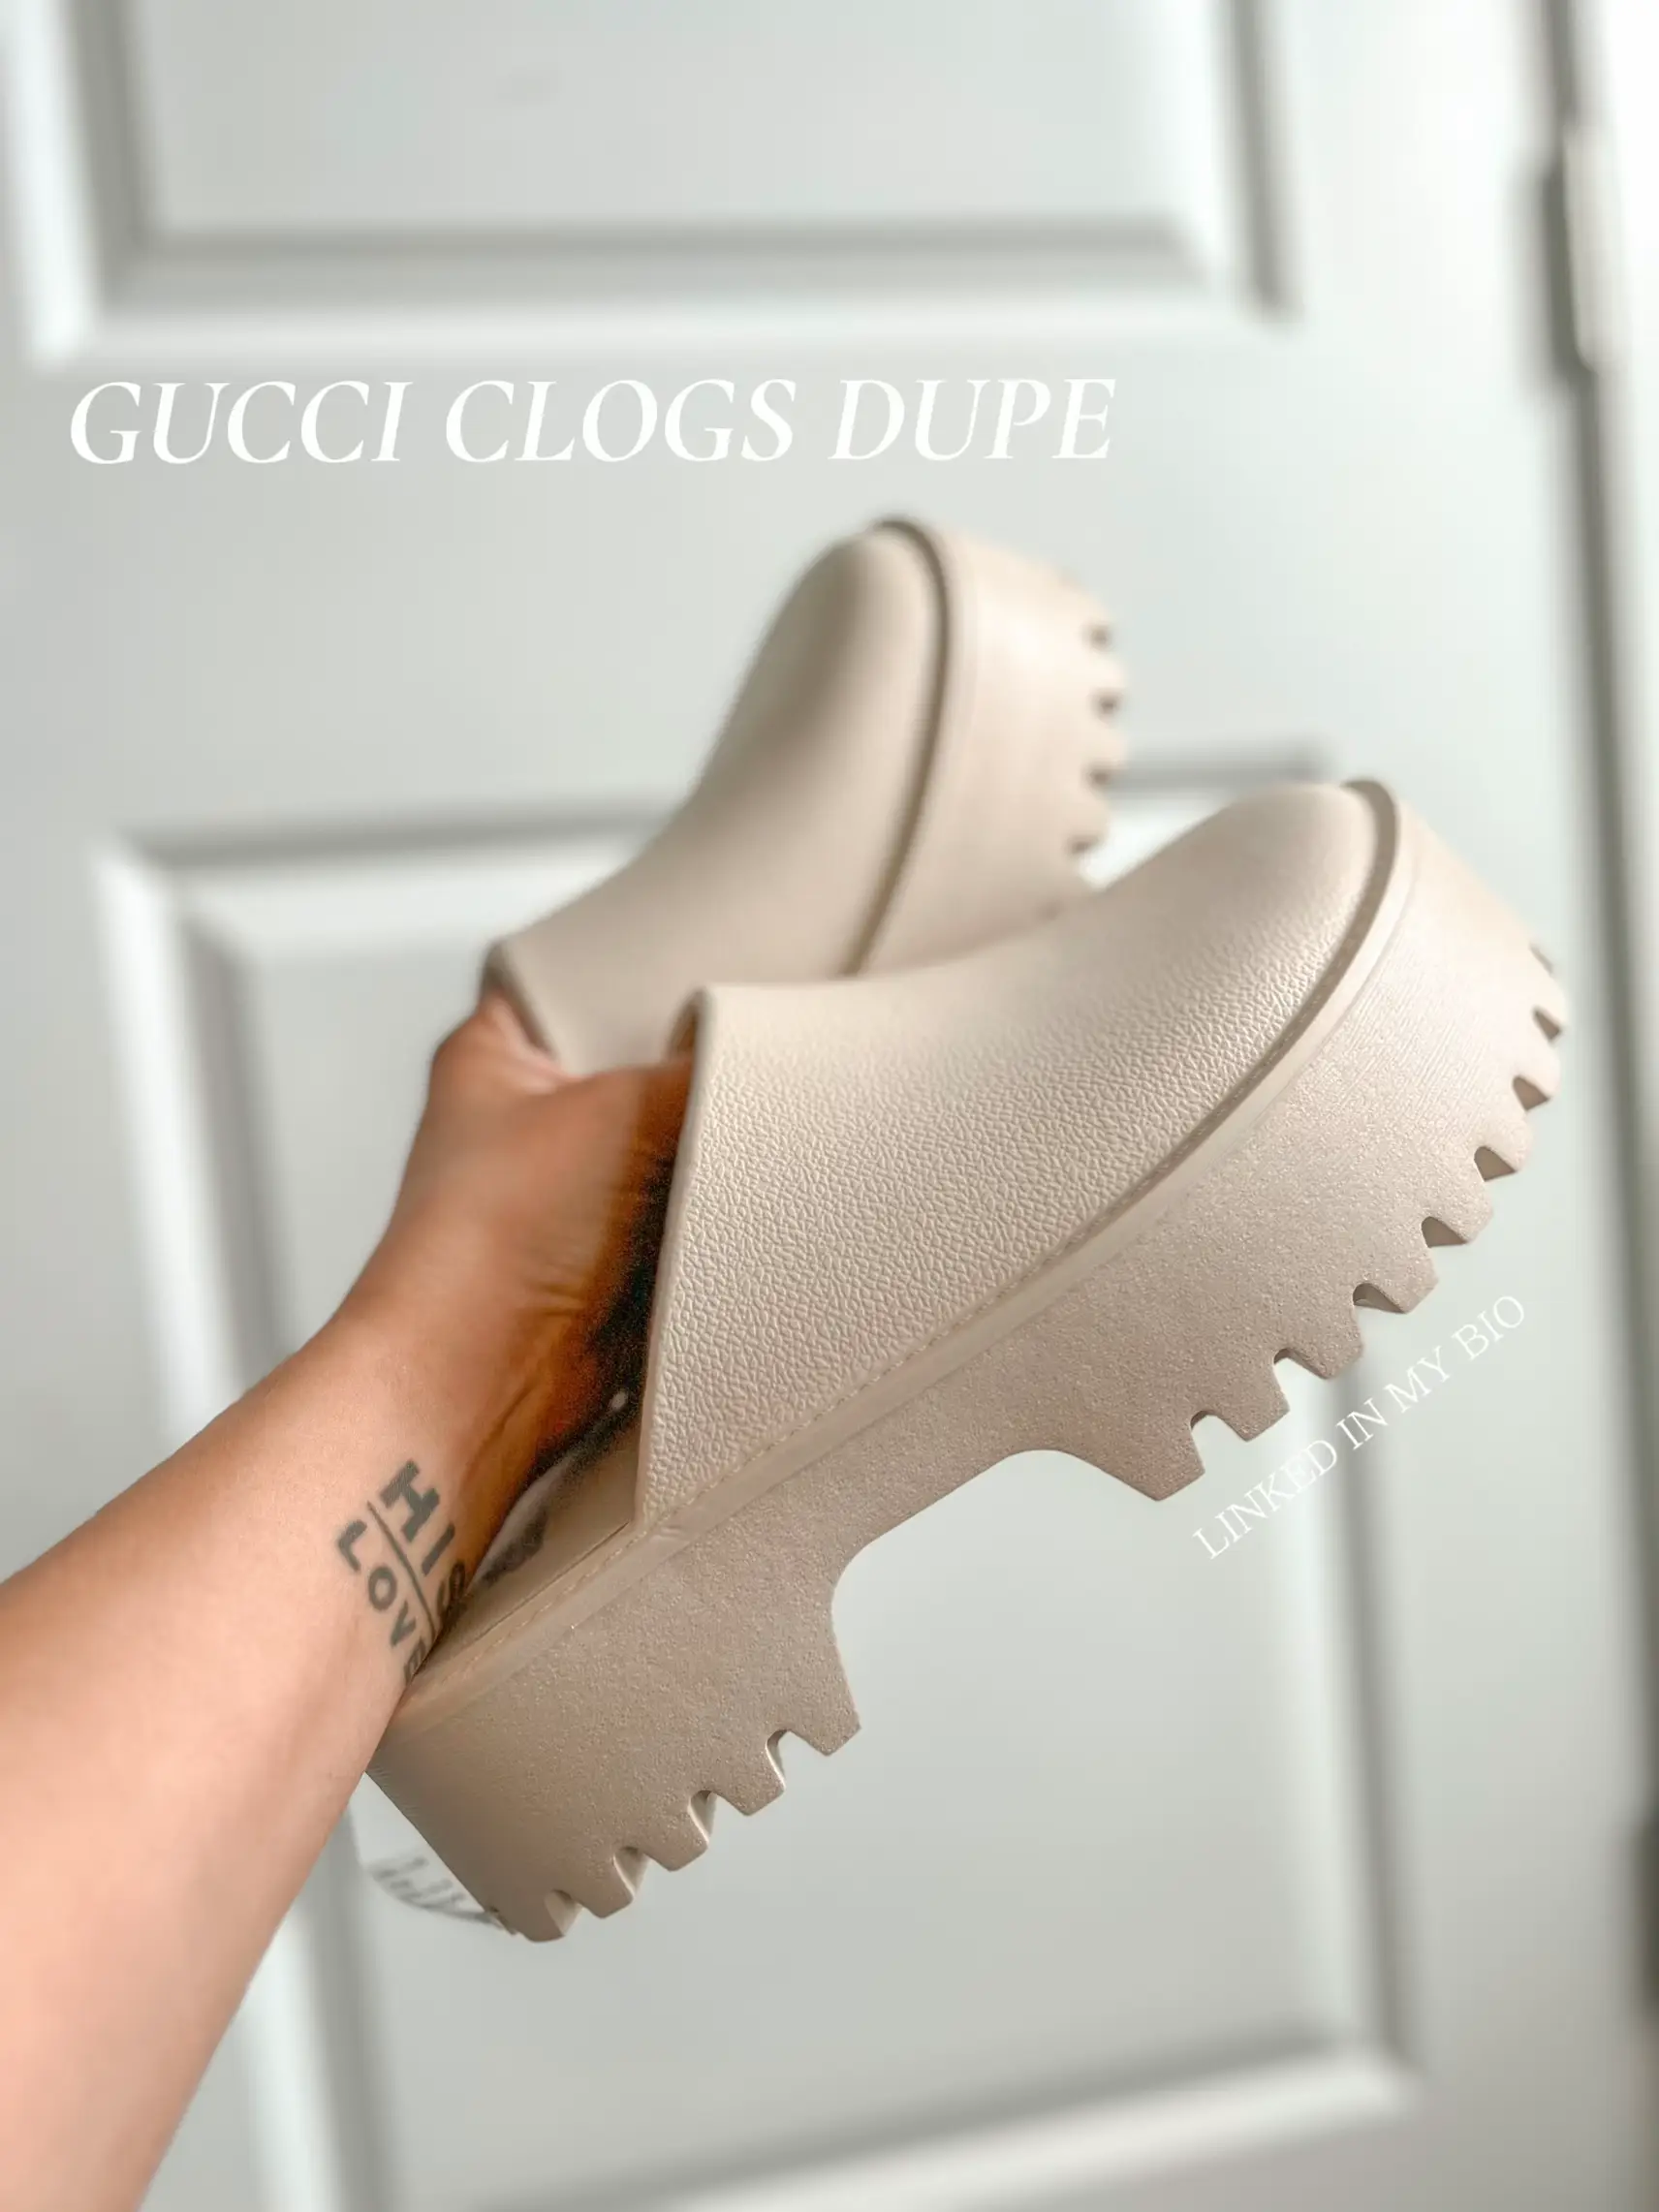 Gucci shoes outfit inspiration - Lemon8 Search